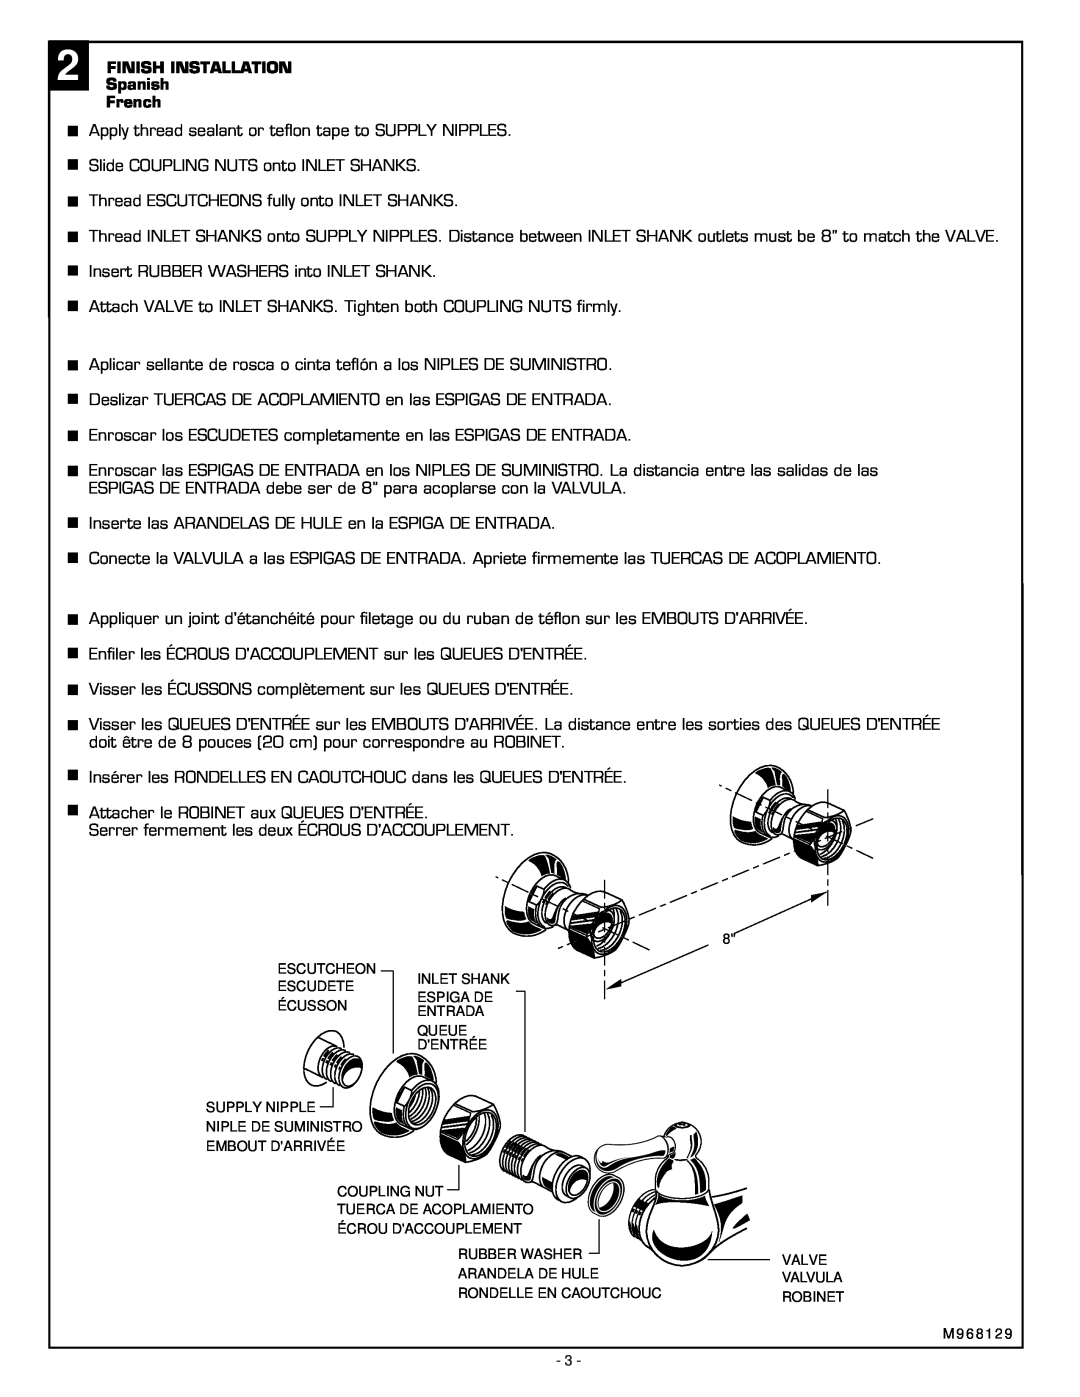 American Standard 7295 Series installation instructions SpanishFINISH INSTALLATION French 